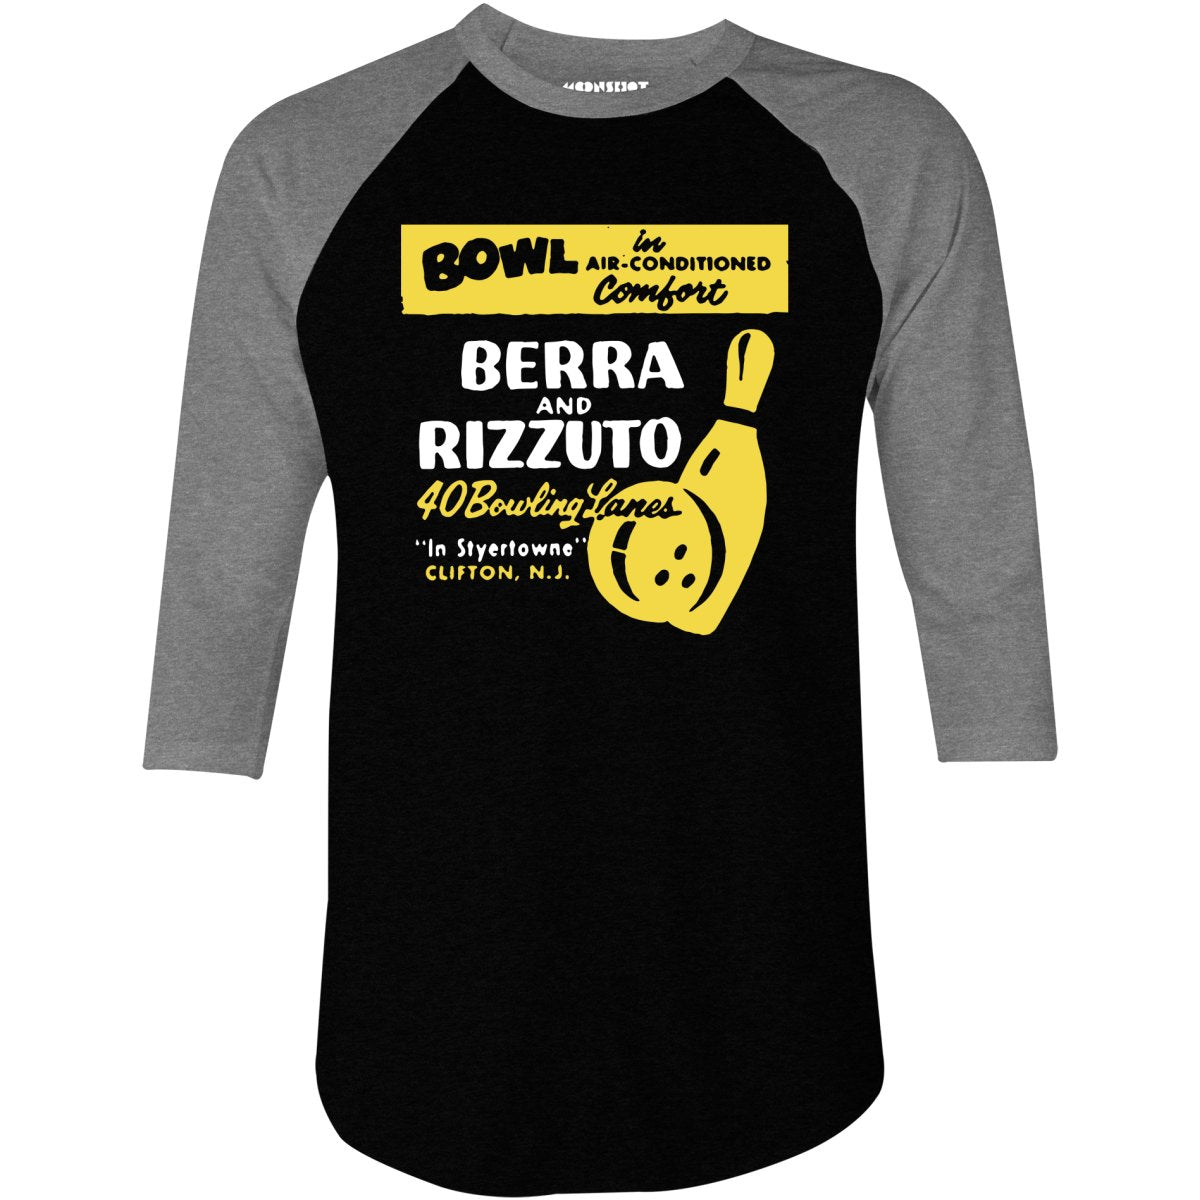 Berra and Rizzuto - Clifton, NJ - Vintage Bowling Alley - 3/4 Sleeve Raglan T-Shirt